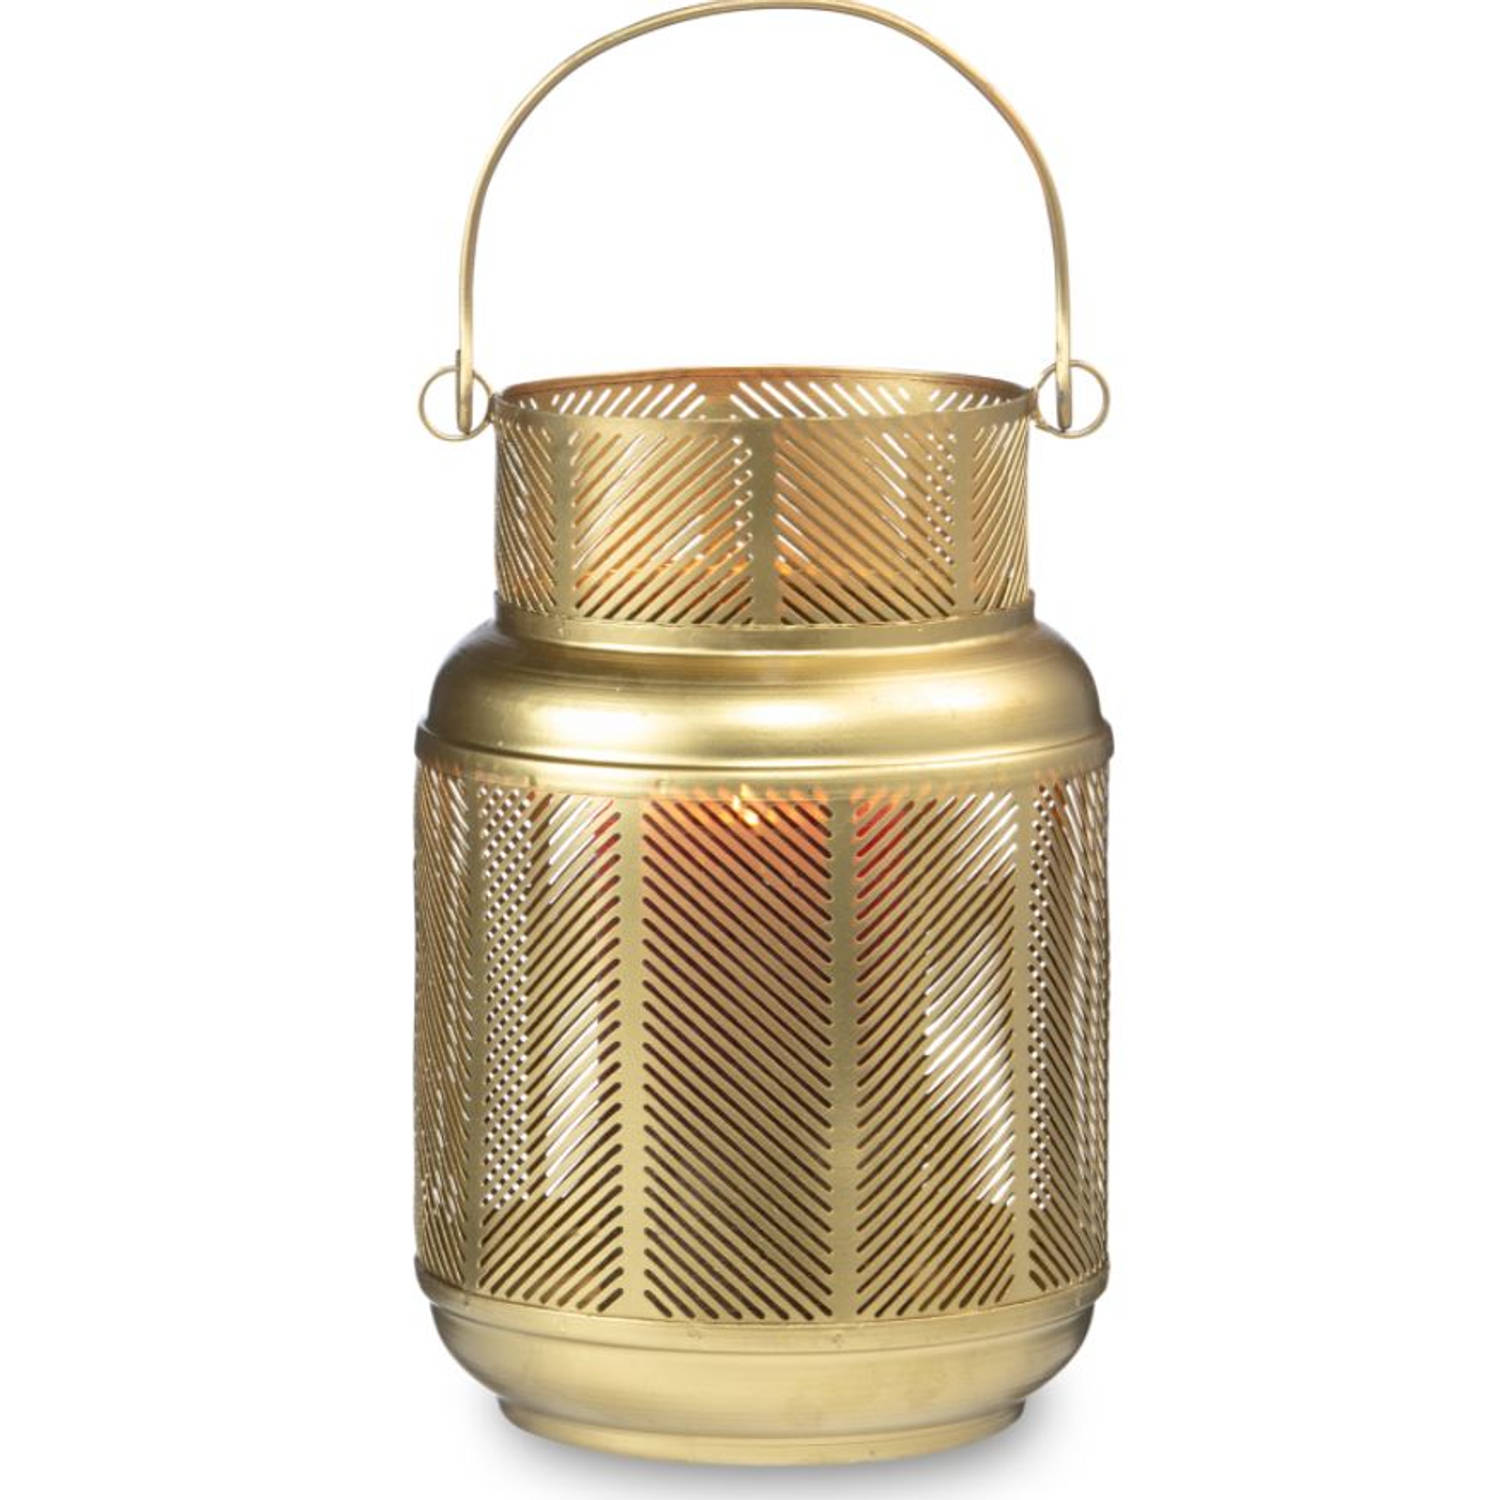 Toezicht houden injecteren toeter Blokker lantaarn Roxy - 10x10x15,5 cm - goud | Blokker